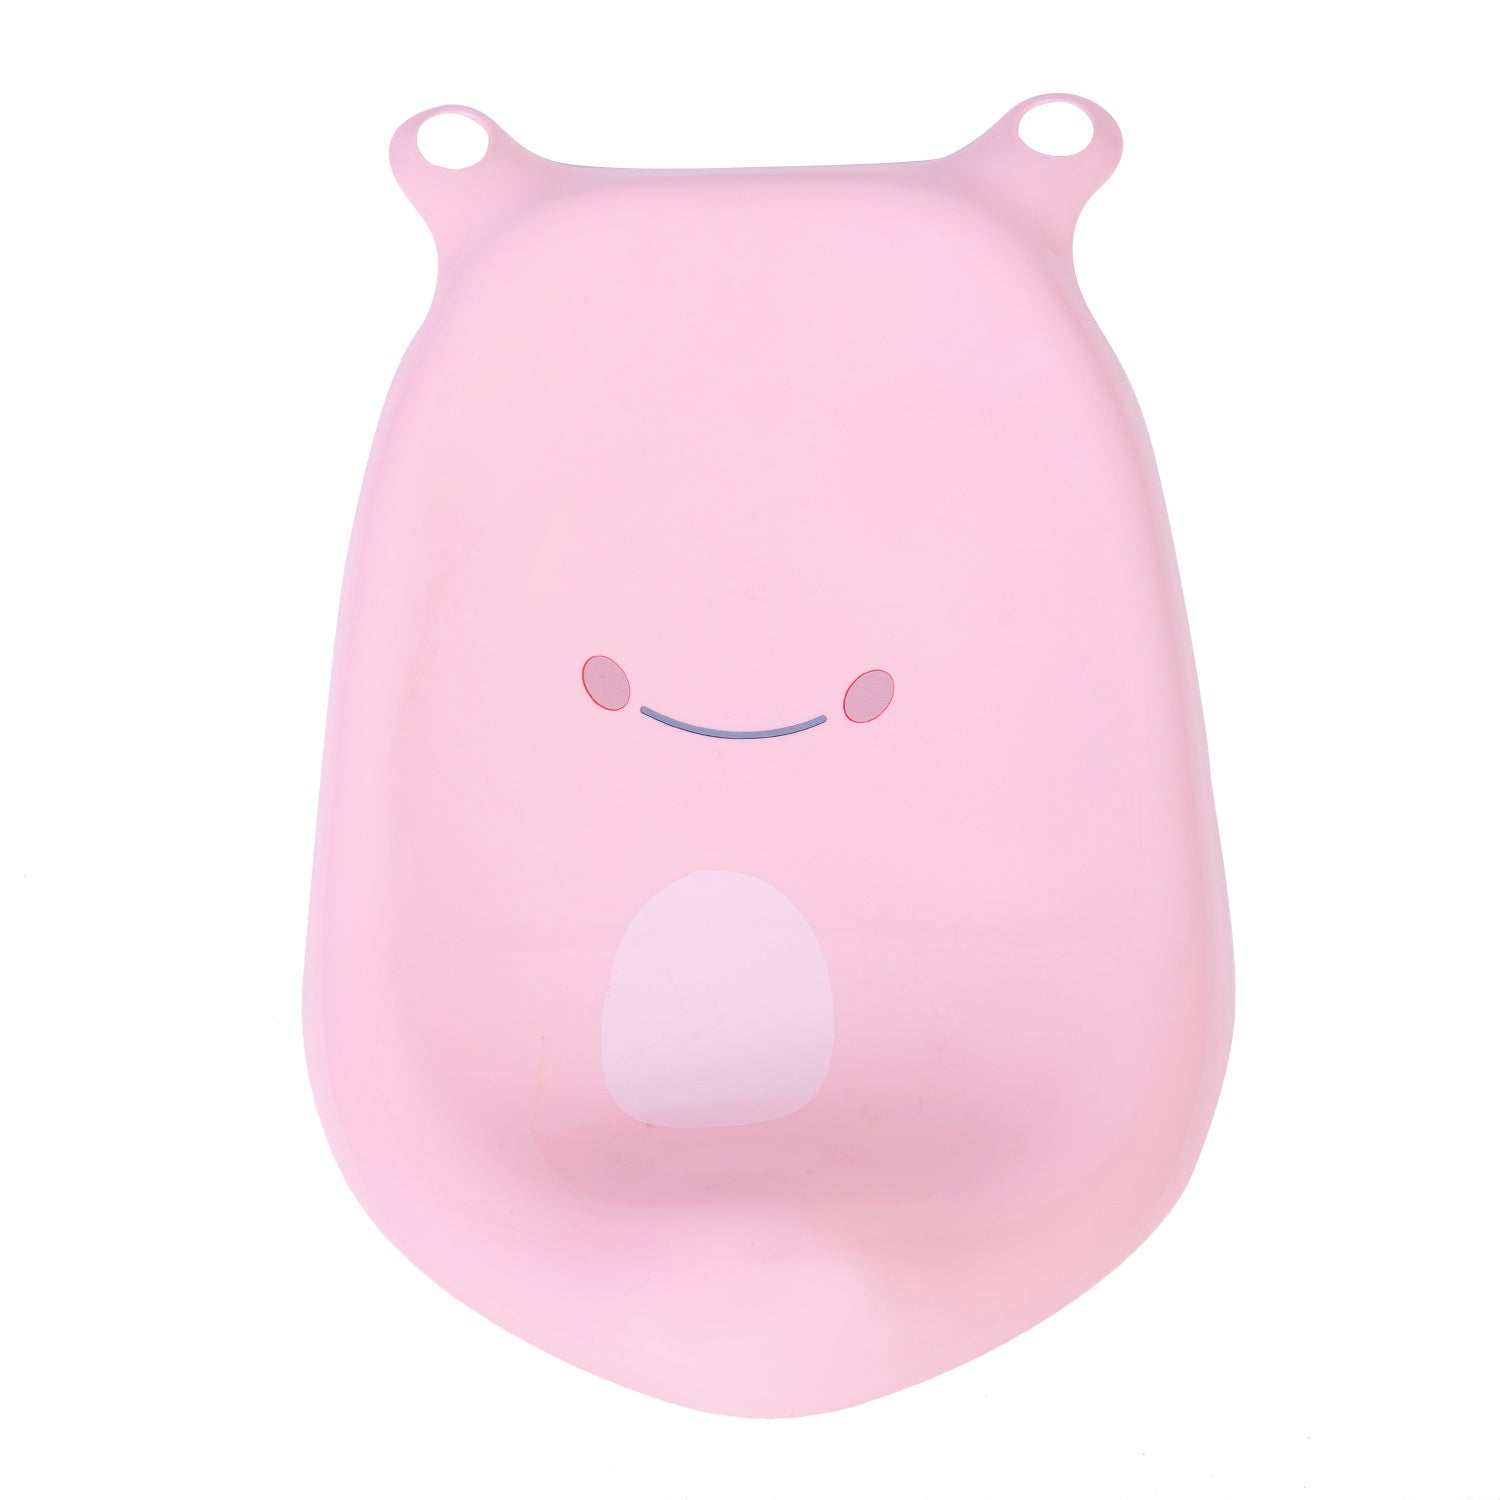 Baby Moo Bath Tub With Bather And Drain Plug Animal Face Pink